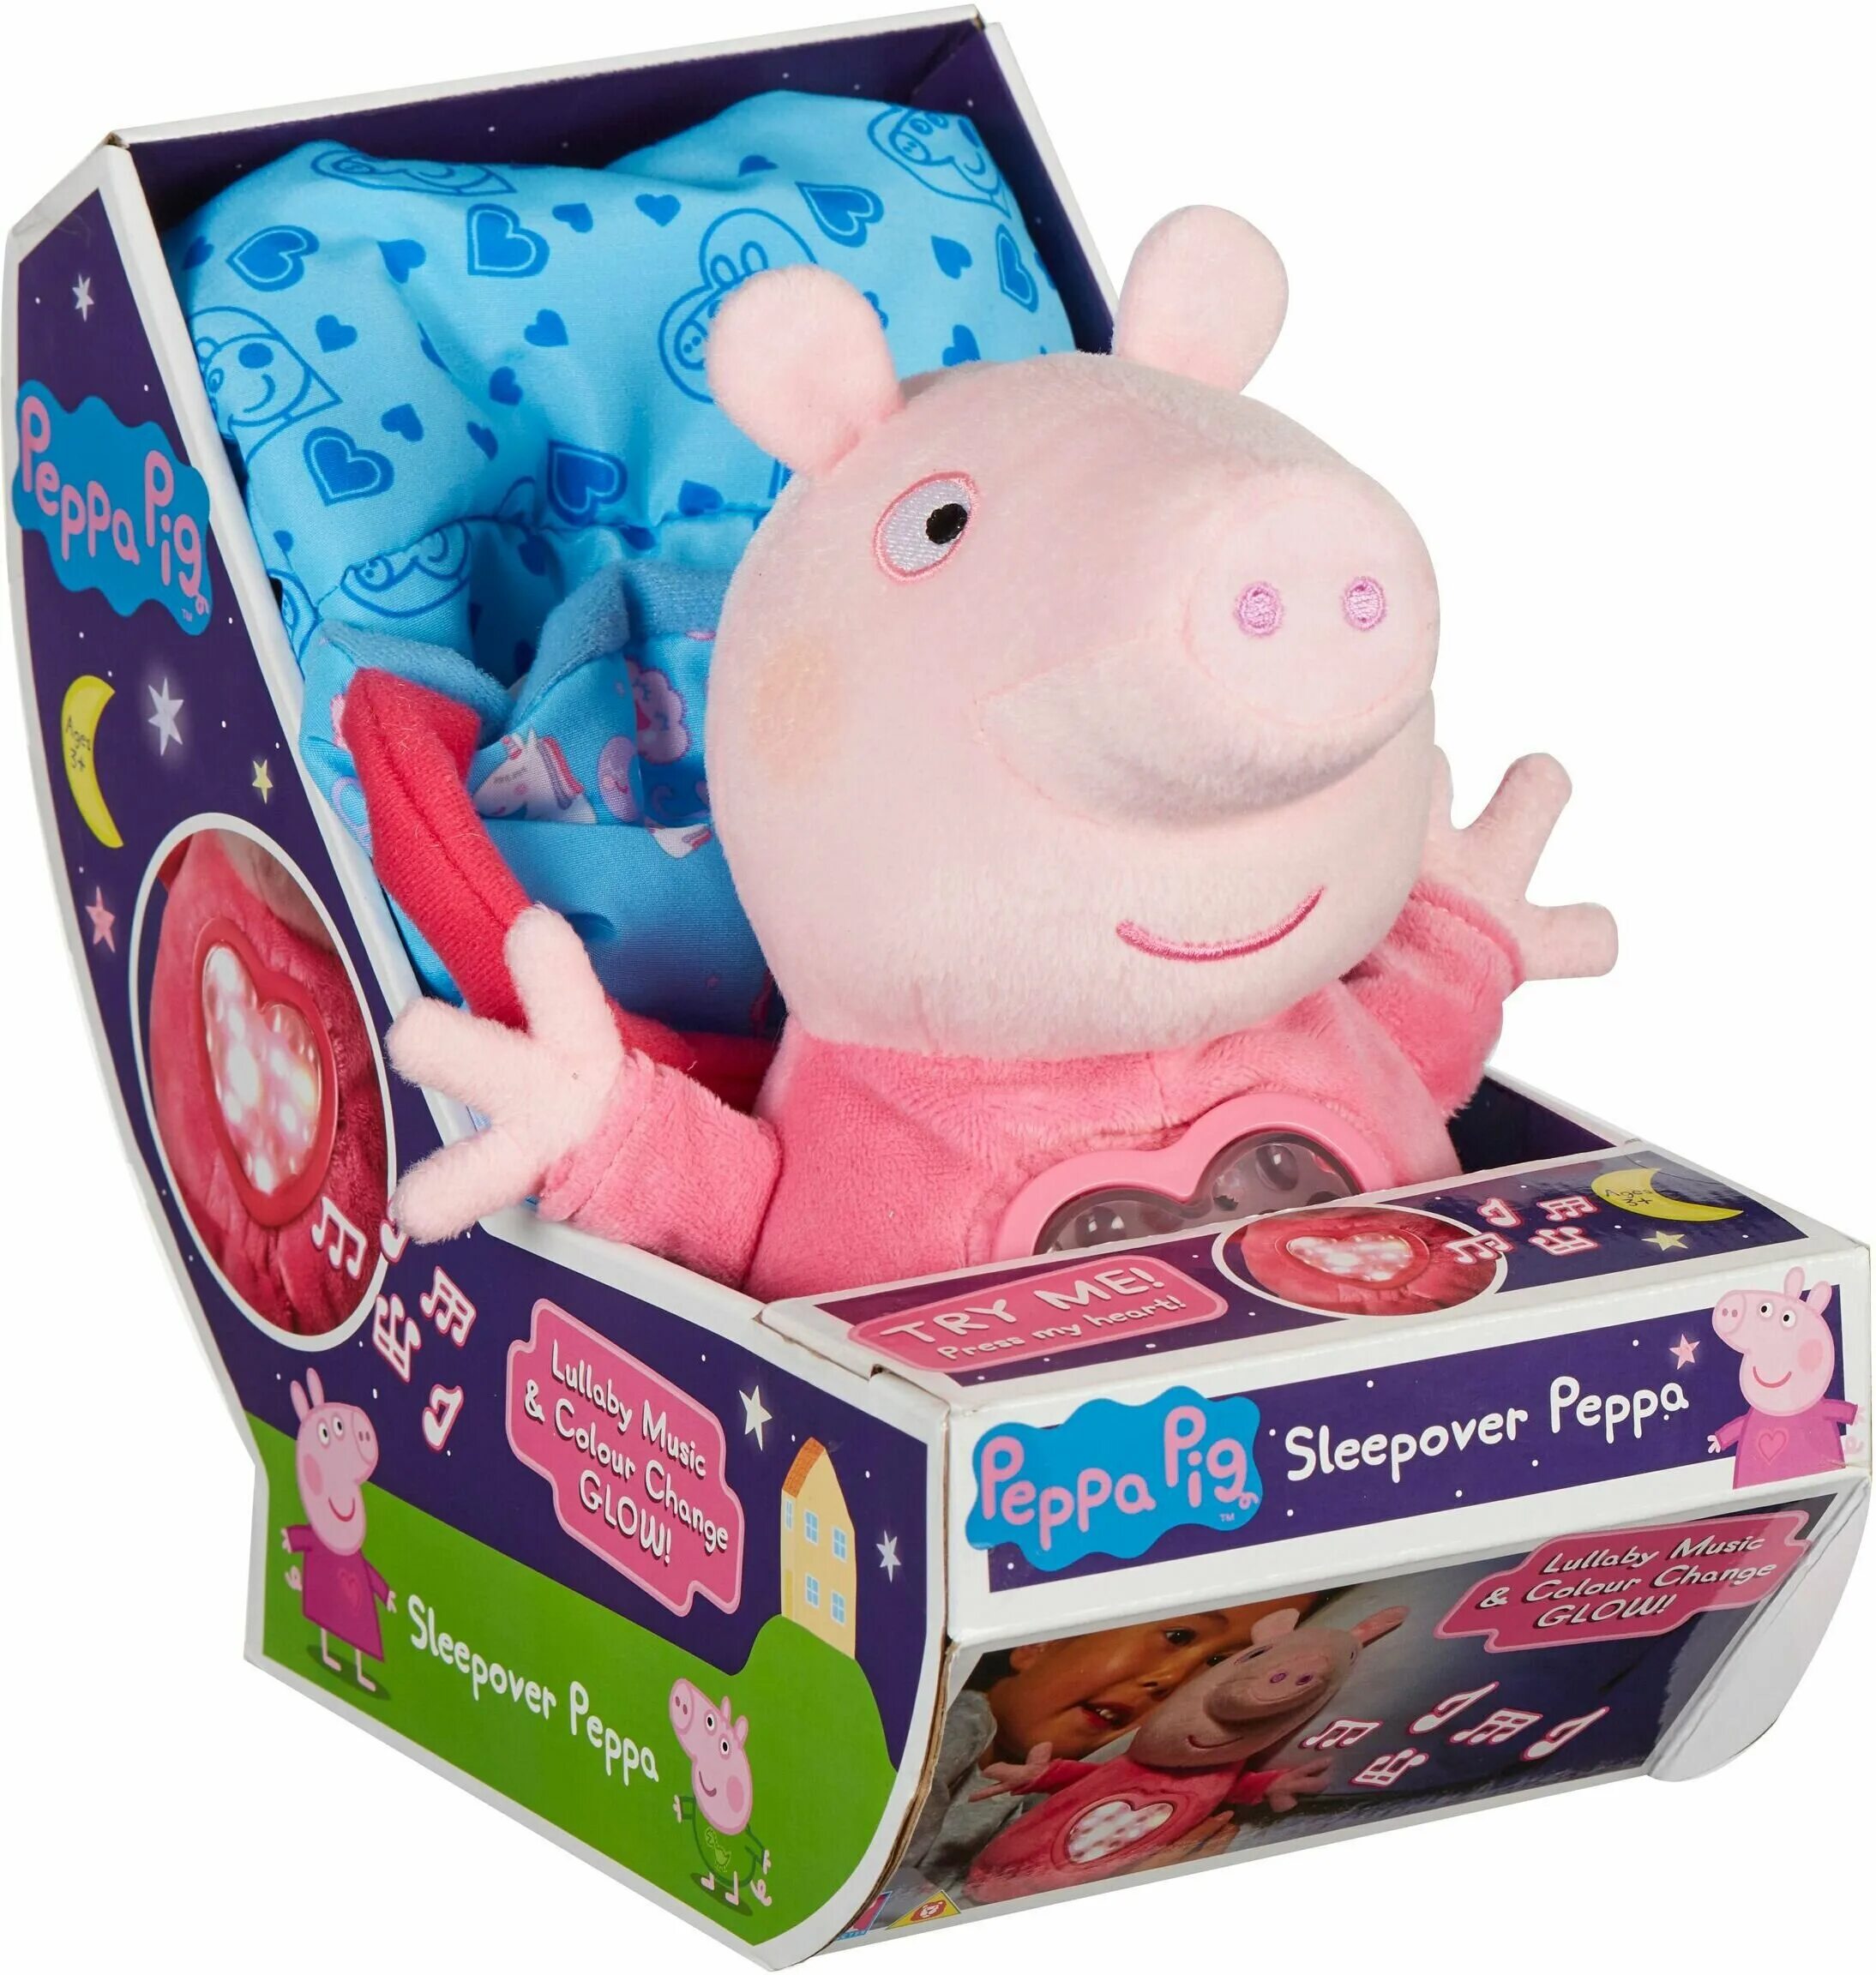 Пепа игрушки. Peppa Pig Sleepover. Свинка Пеппа игрушки. Фигурки Peppa Pig Bedtime. Игрушка Свинка Пеппа большой.